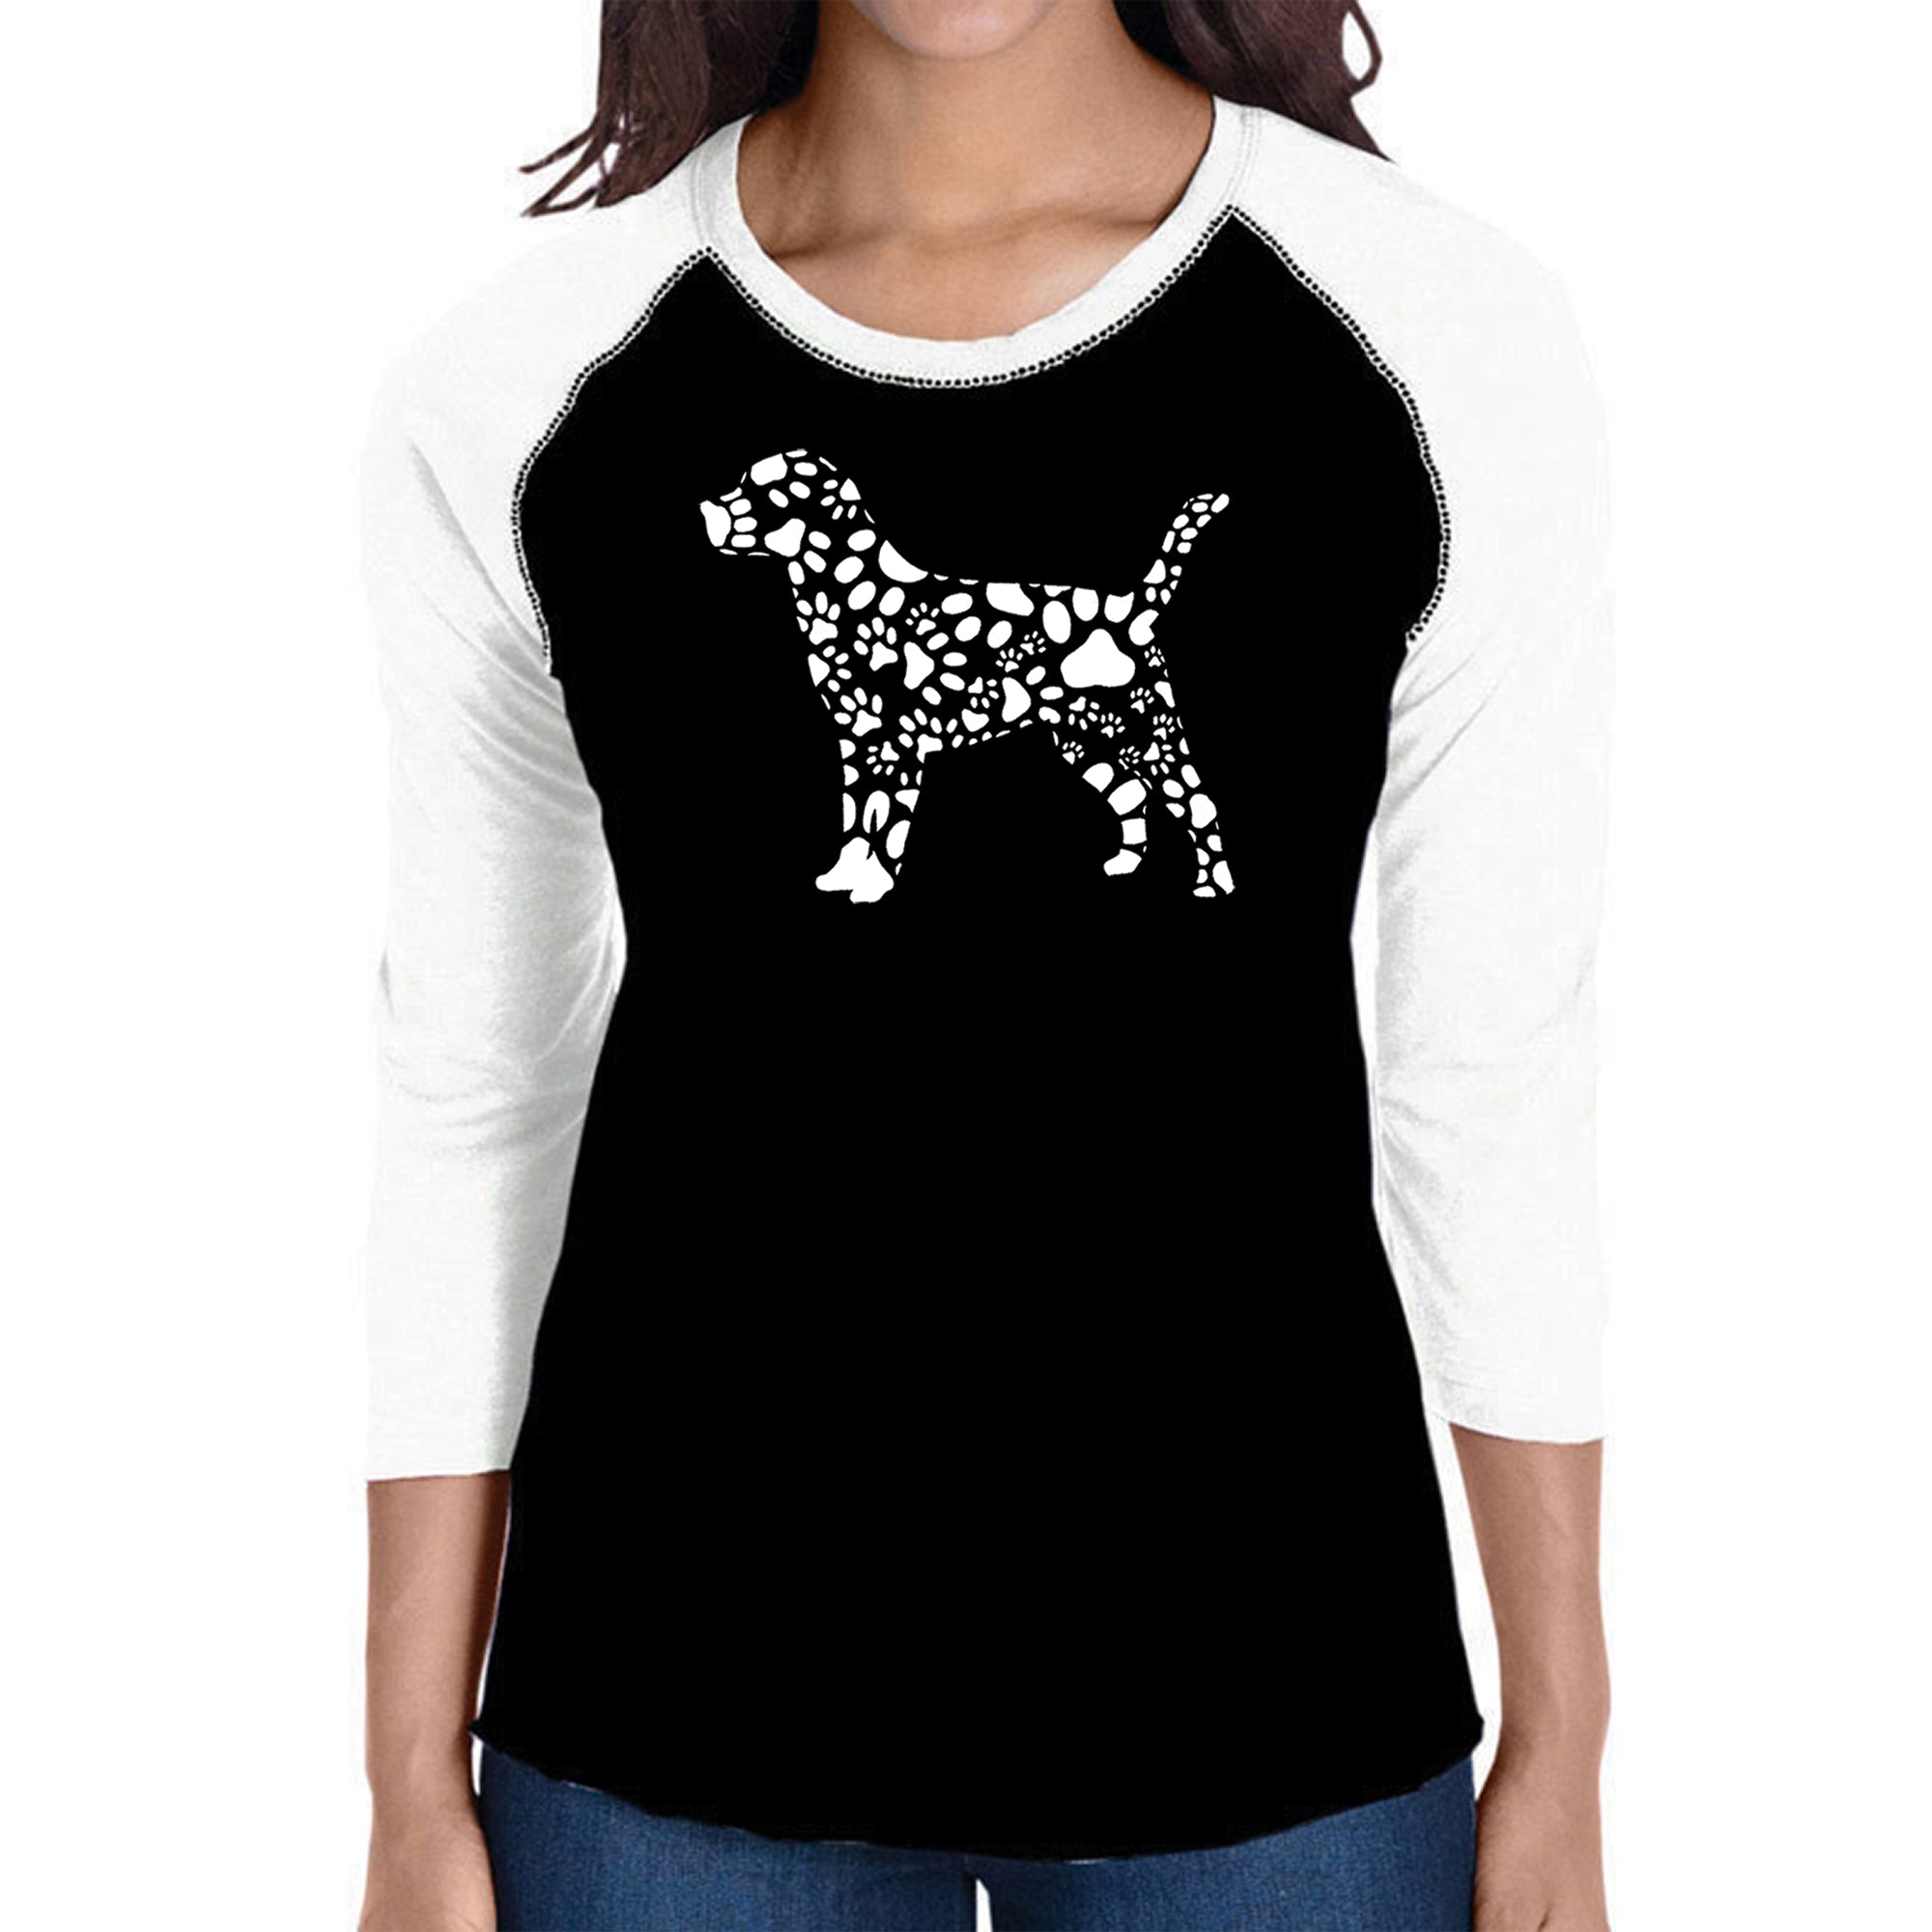 Dog Paw Prints - Women's Raglan Word Art T-Shirt - Black/White - XX-Large